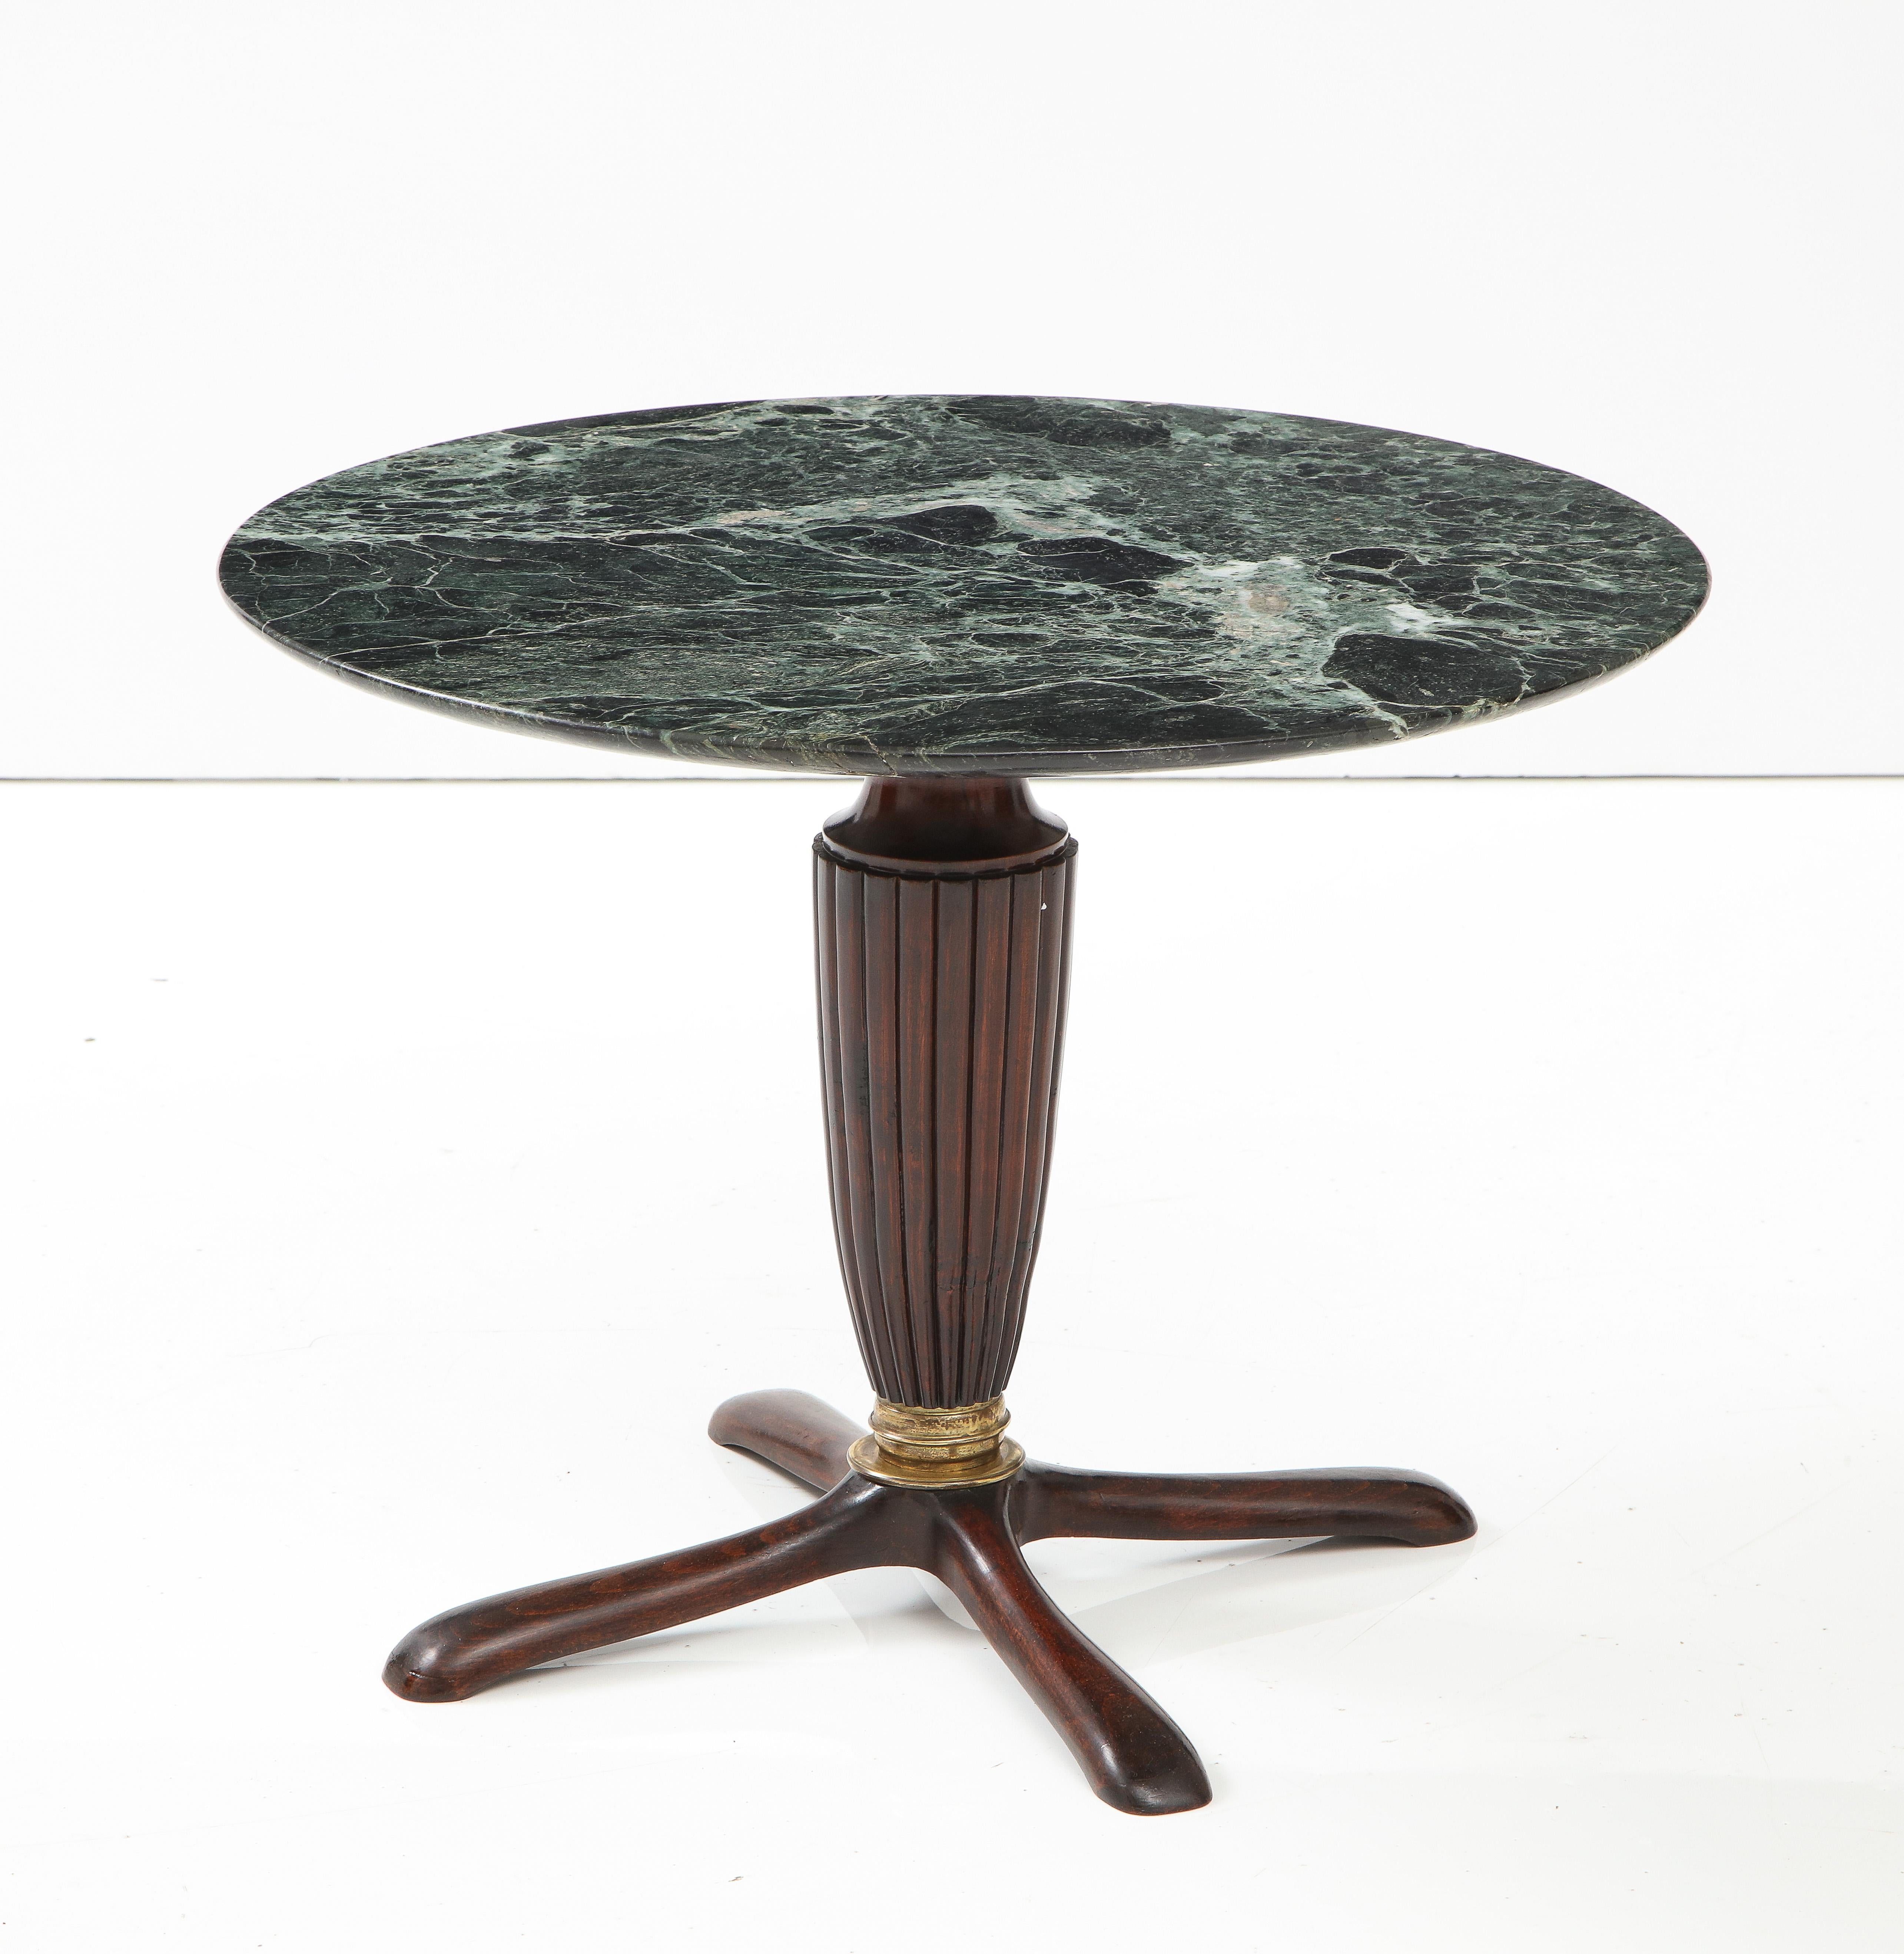 Mid-20th Century Italian Mahogany Circular Side Table with Verdi Alpi Marble Top, 1940's For Sale